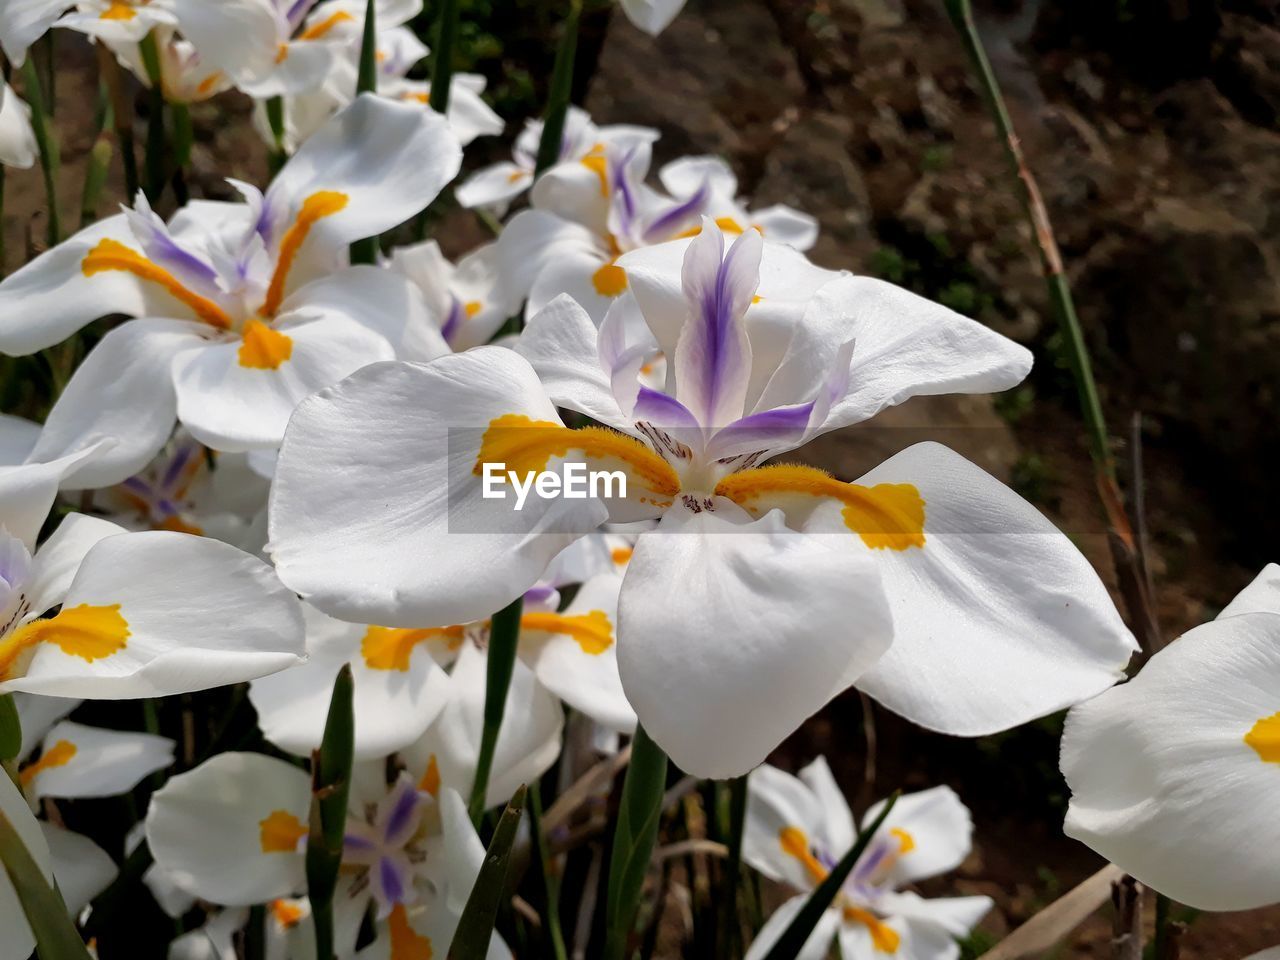 Close-up of white crocus flowers